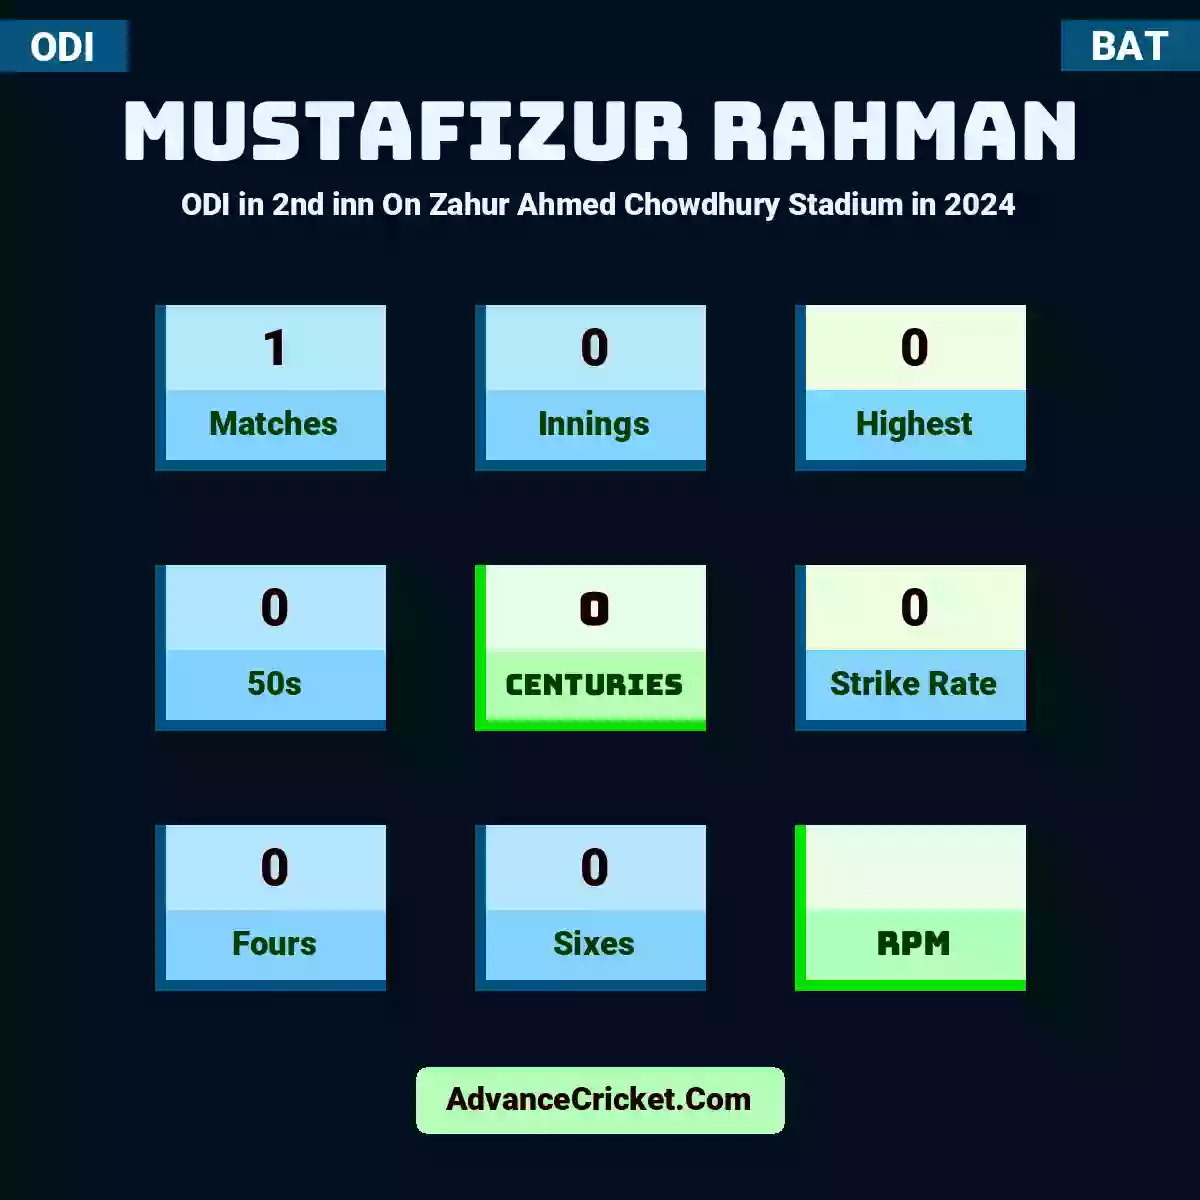 Mustafizur Rahman ODI  in 2nd inn On Zahur Ahmed Chowdhury Stadium in 2024, Mustafizur Rahman played 1 matches, scored 0 runs as highest, 0 half-centuries, and 0 centuries, with a strike rate of 0. M.Rahman hit 0 fours and 0 sixes.